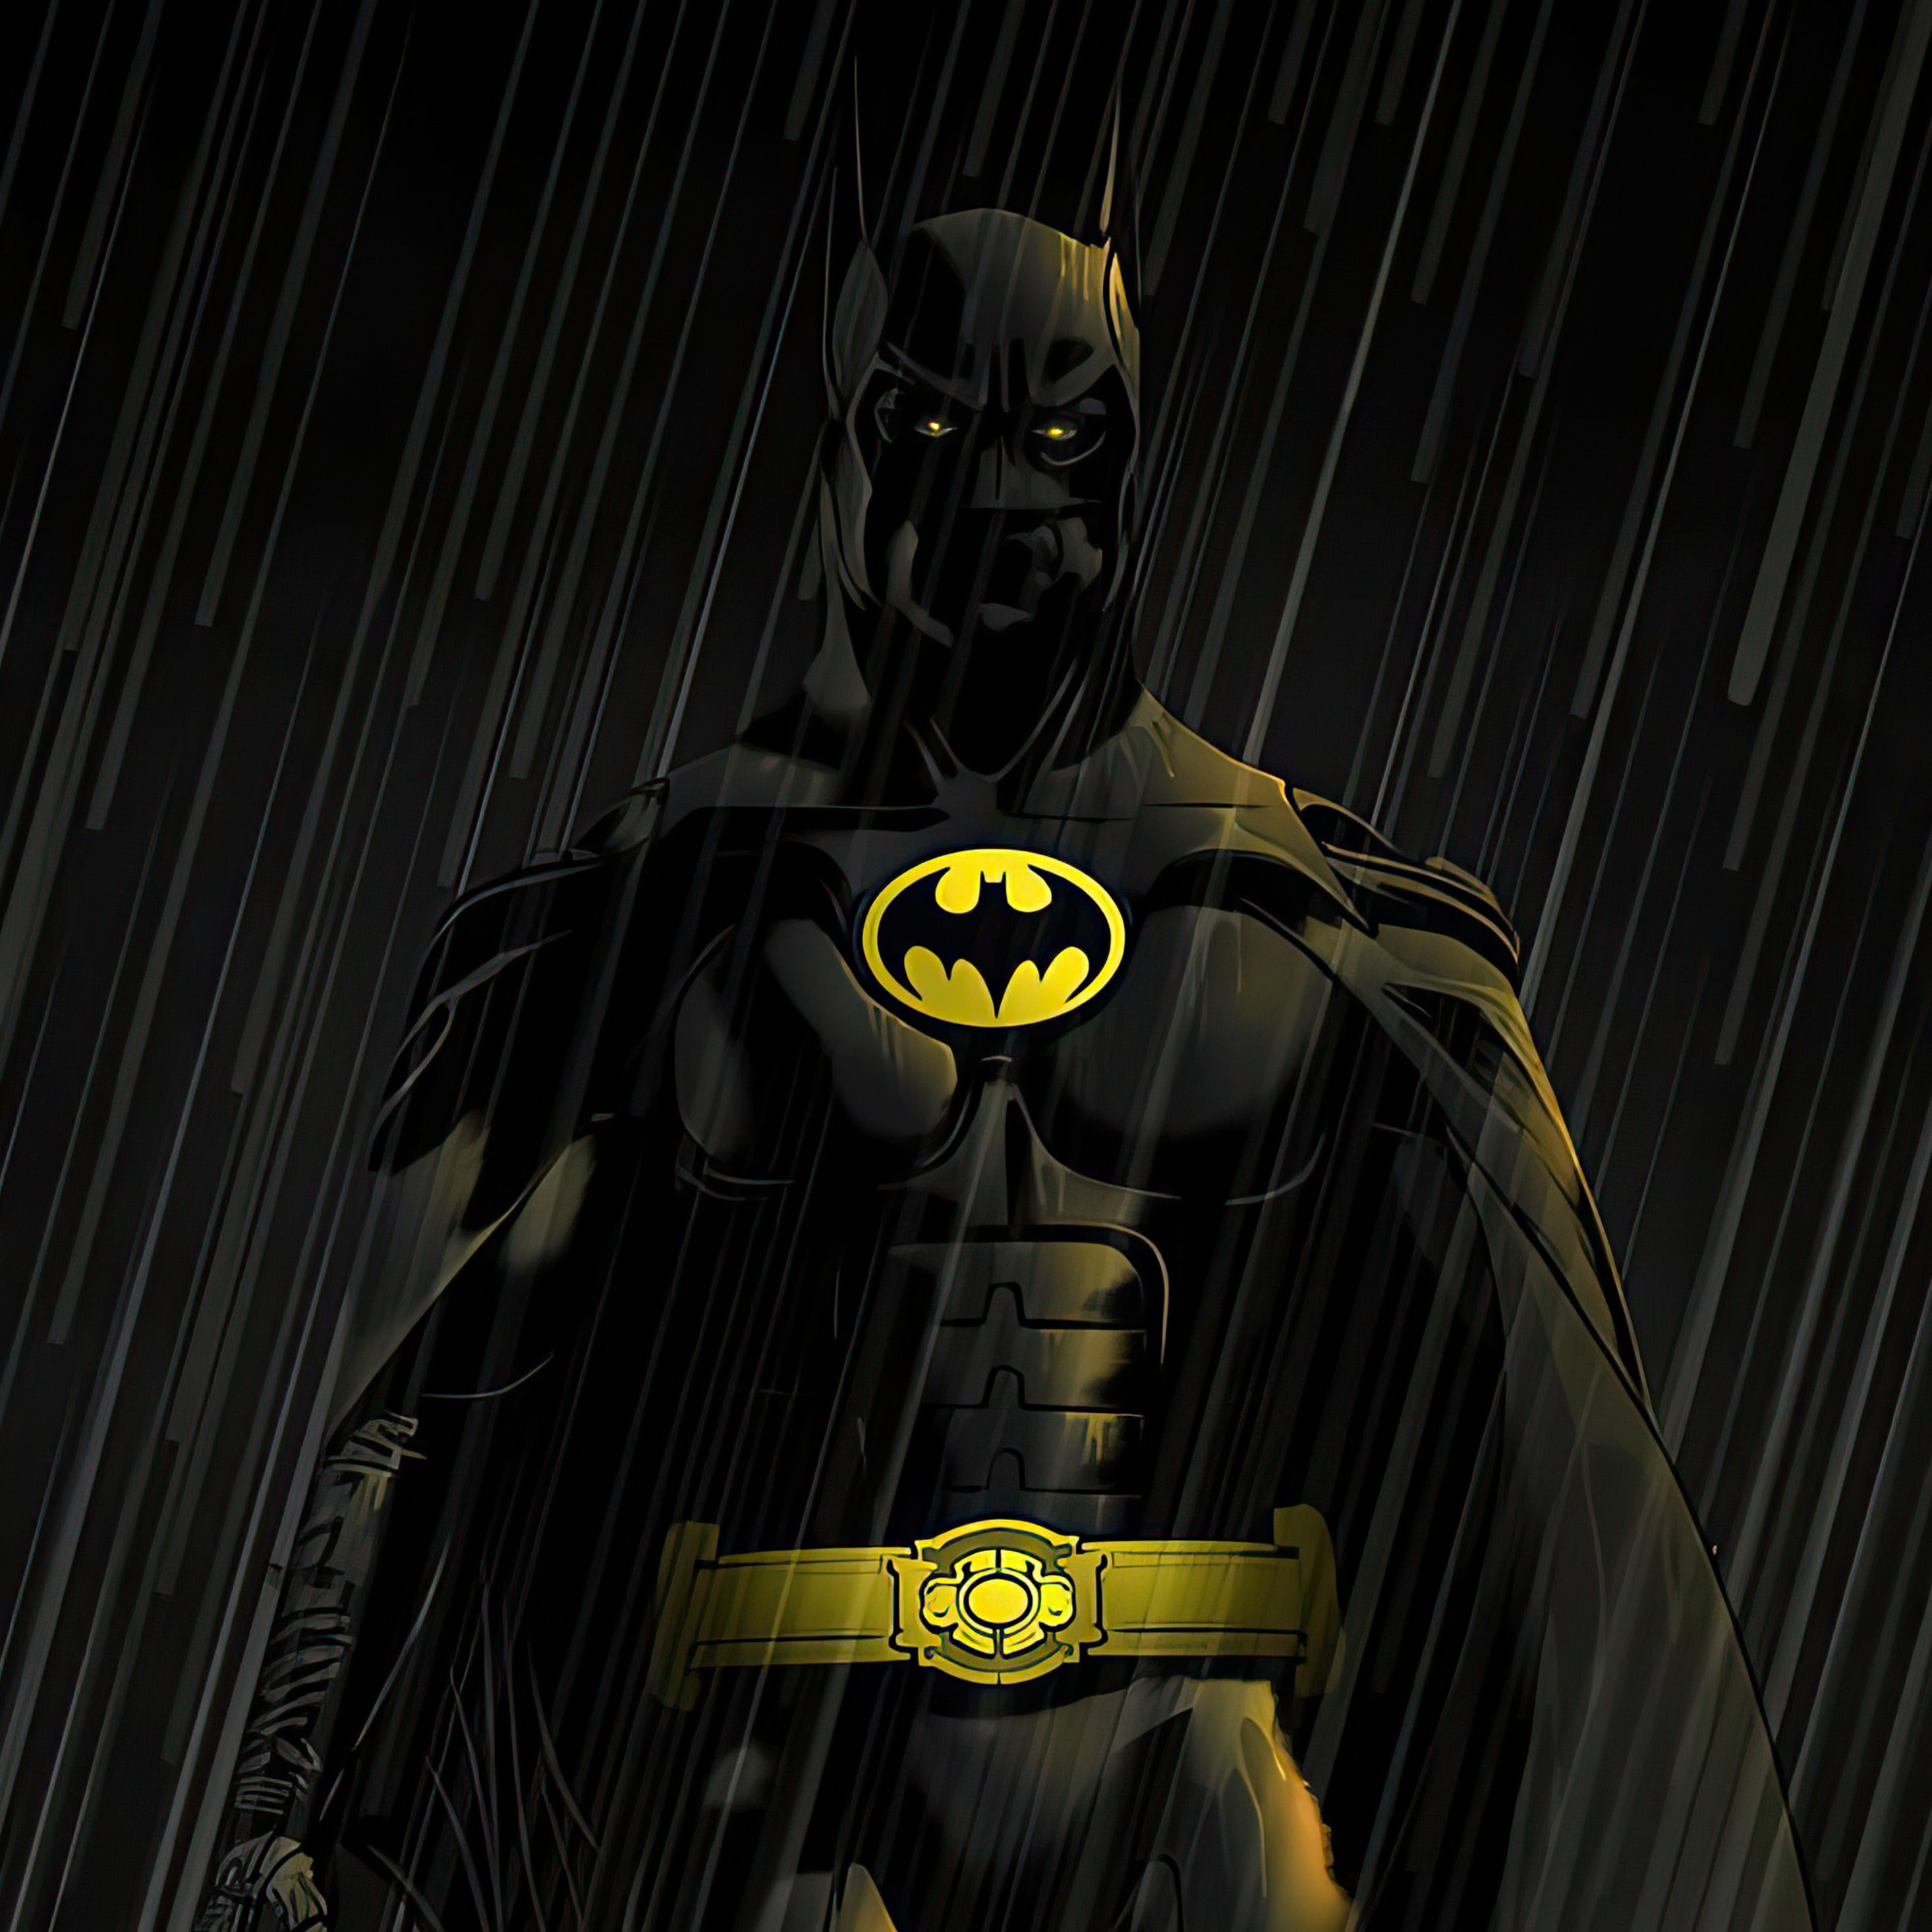 Batman Dark 4k 2020 iPad Pro Retina Display HD 4k Wallpaper, Image, Background, Photo and Picture